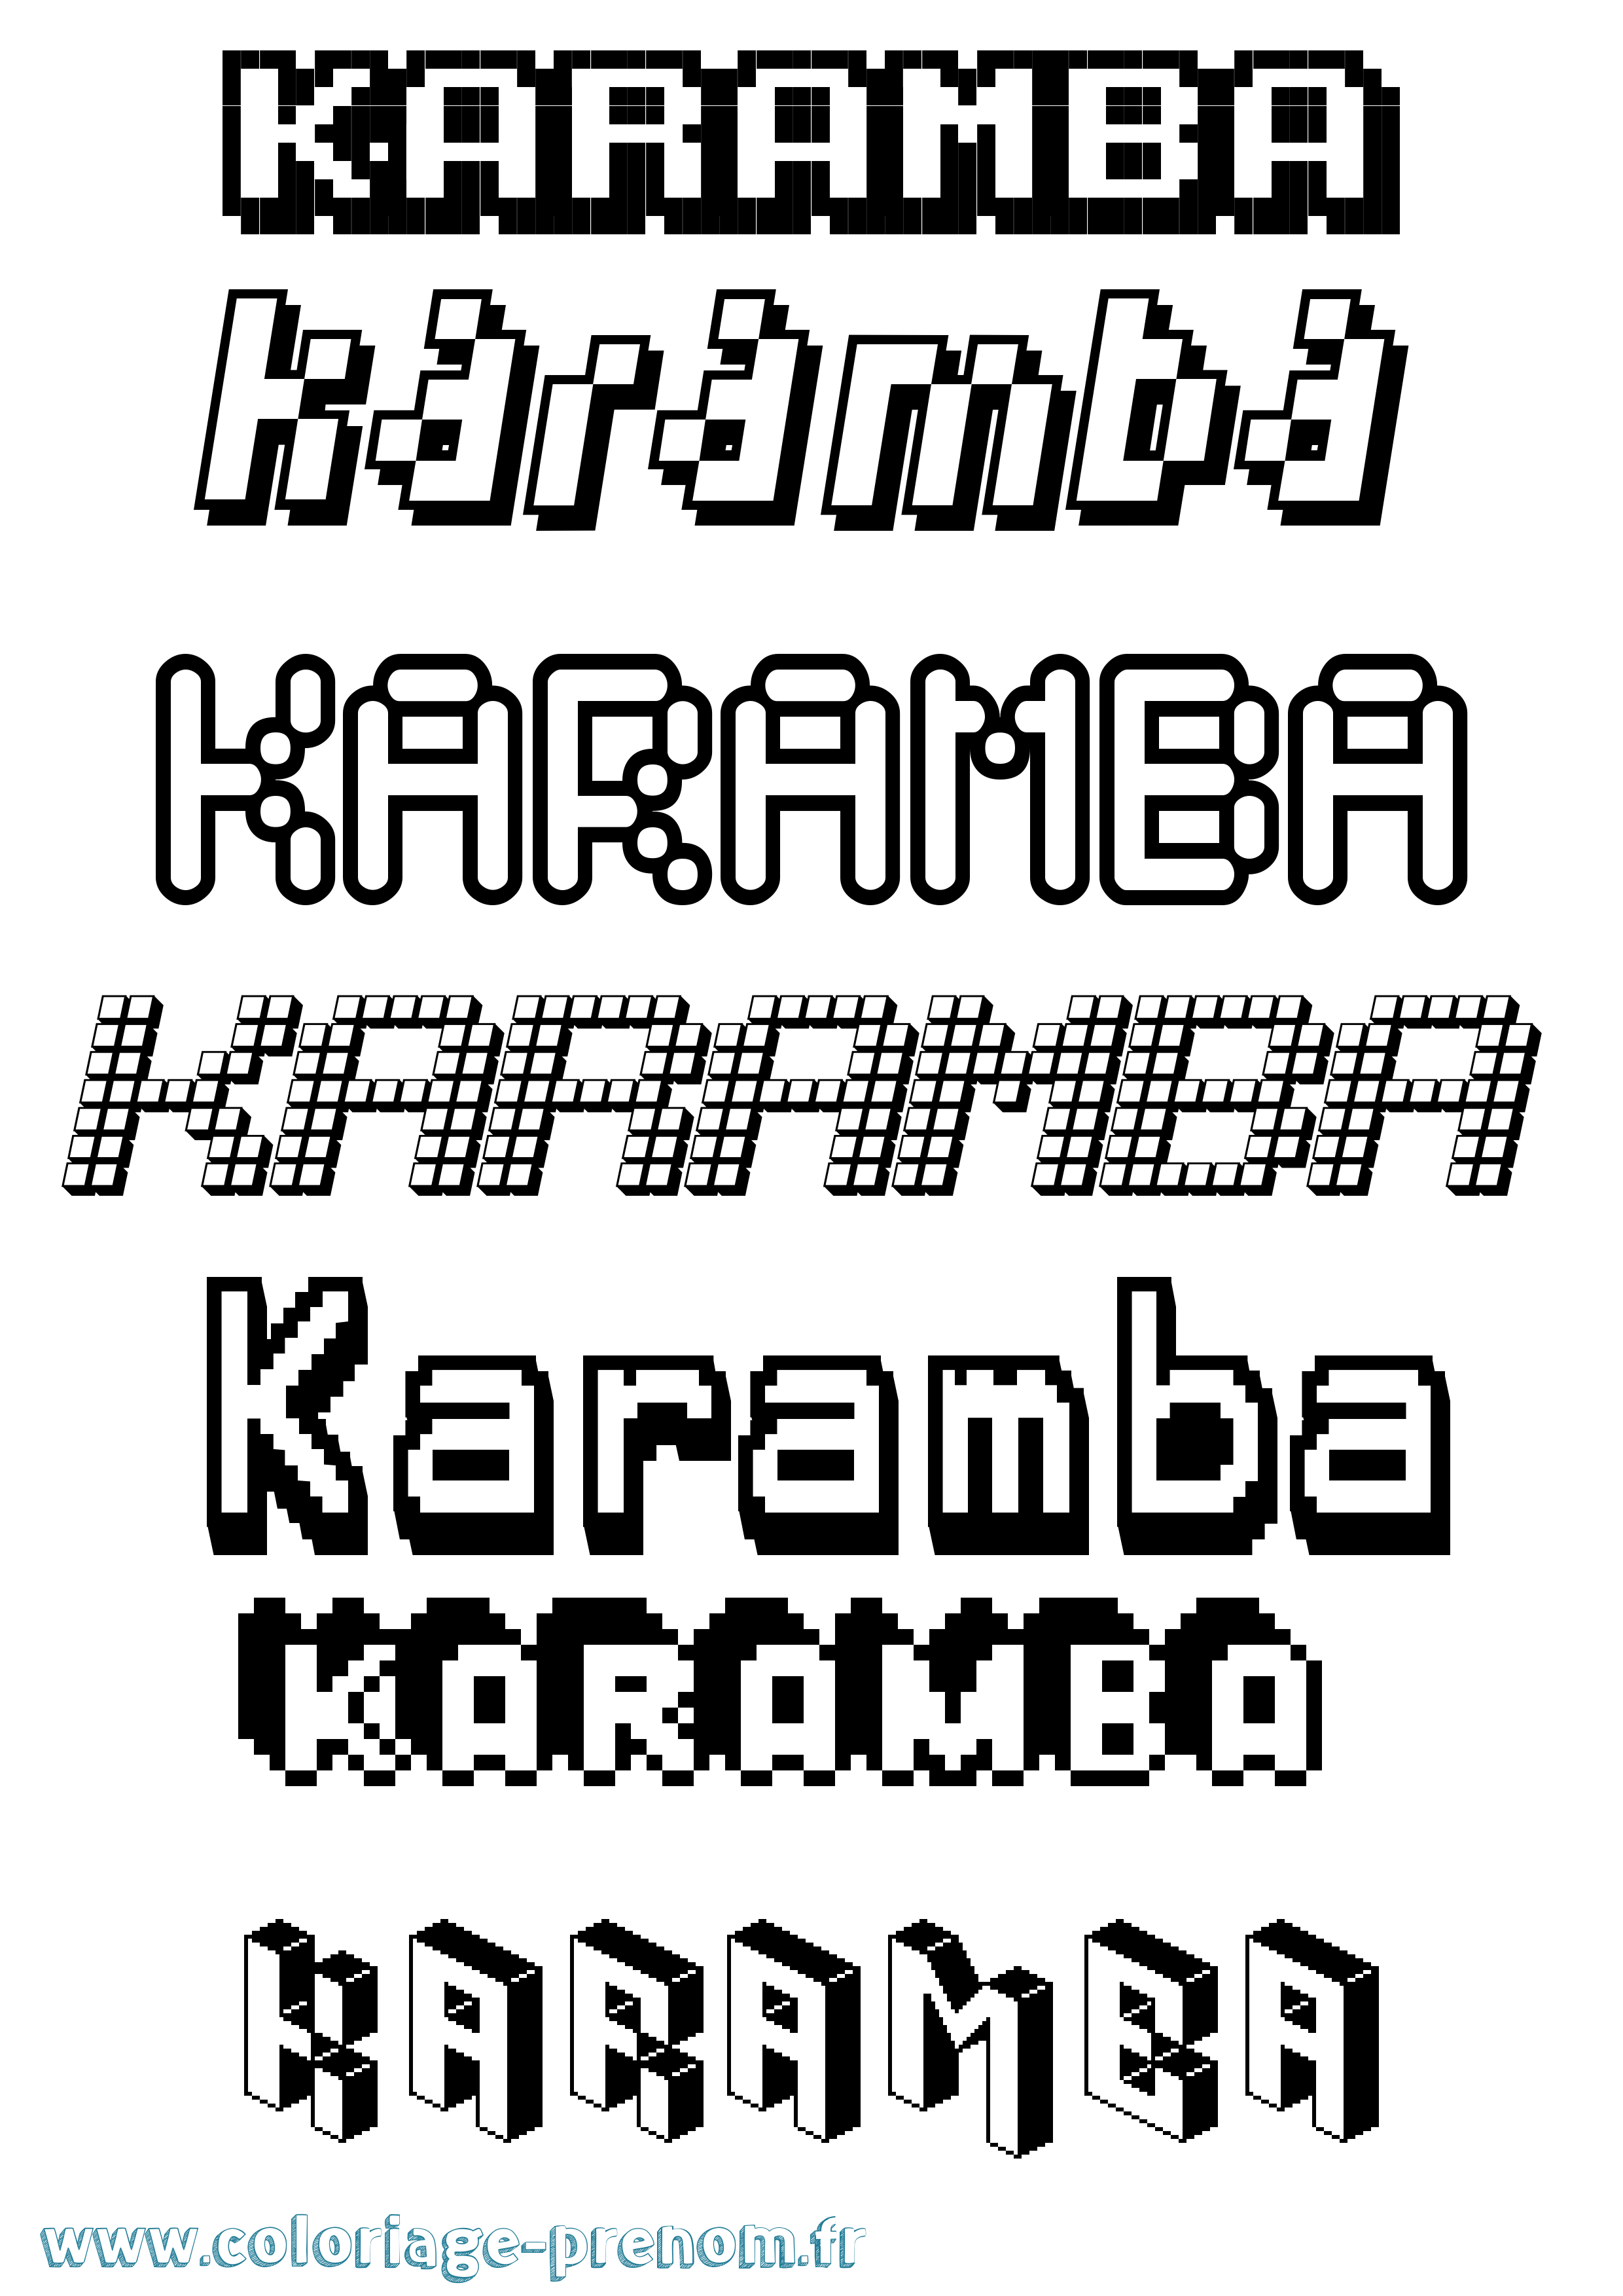 Coloriage prénom Karamba Pixel